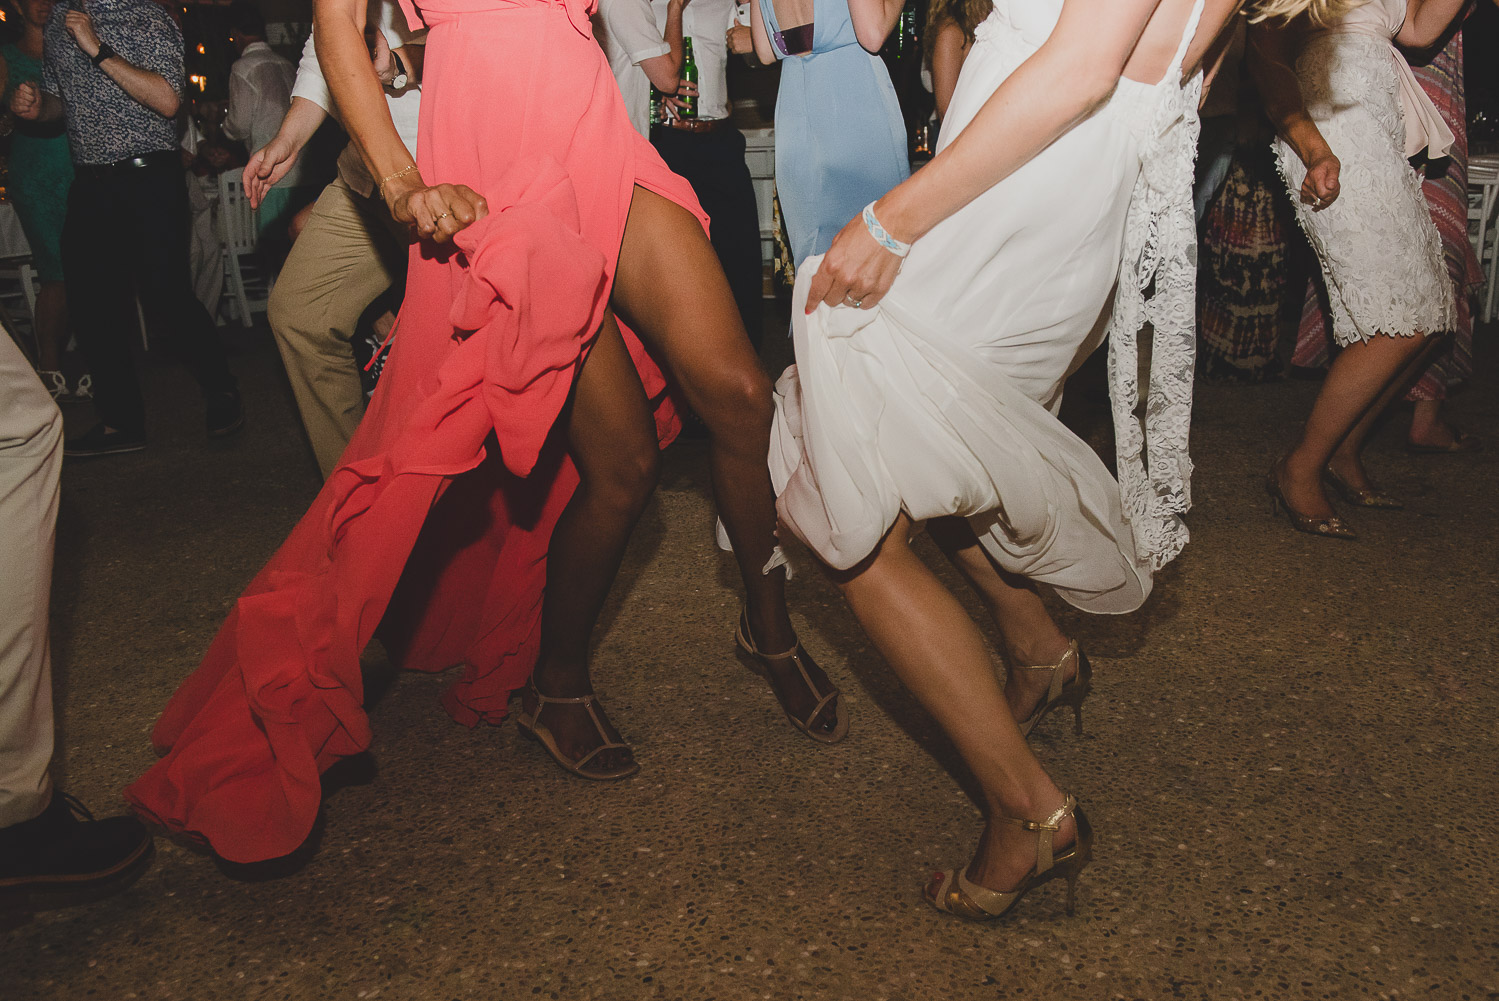 Wedding photographer Mykonos: dresses on the dance floor at Elia during Mykonos wedding.